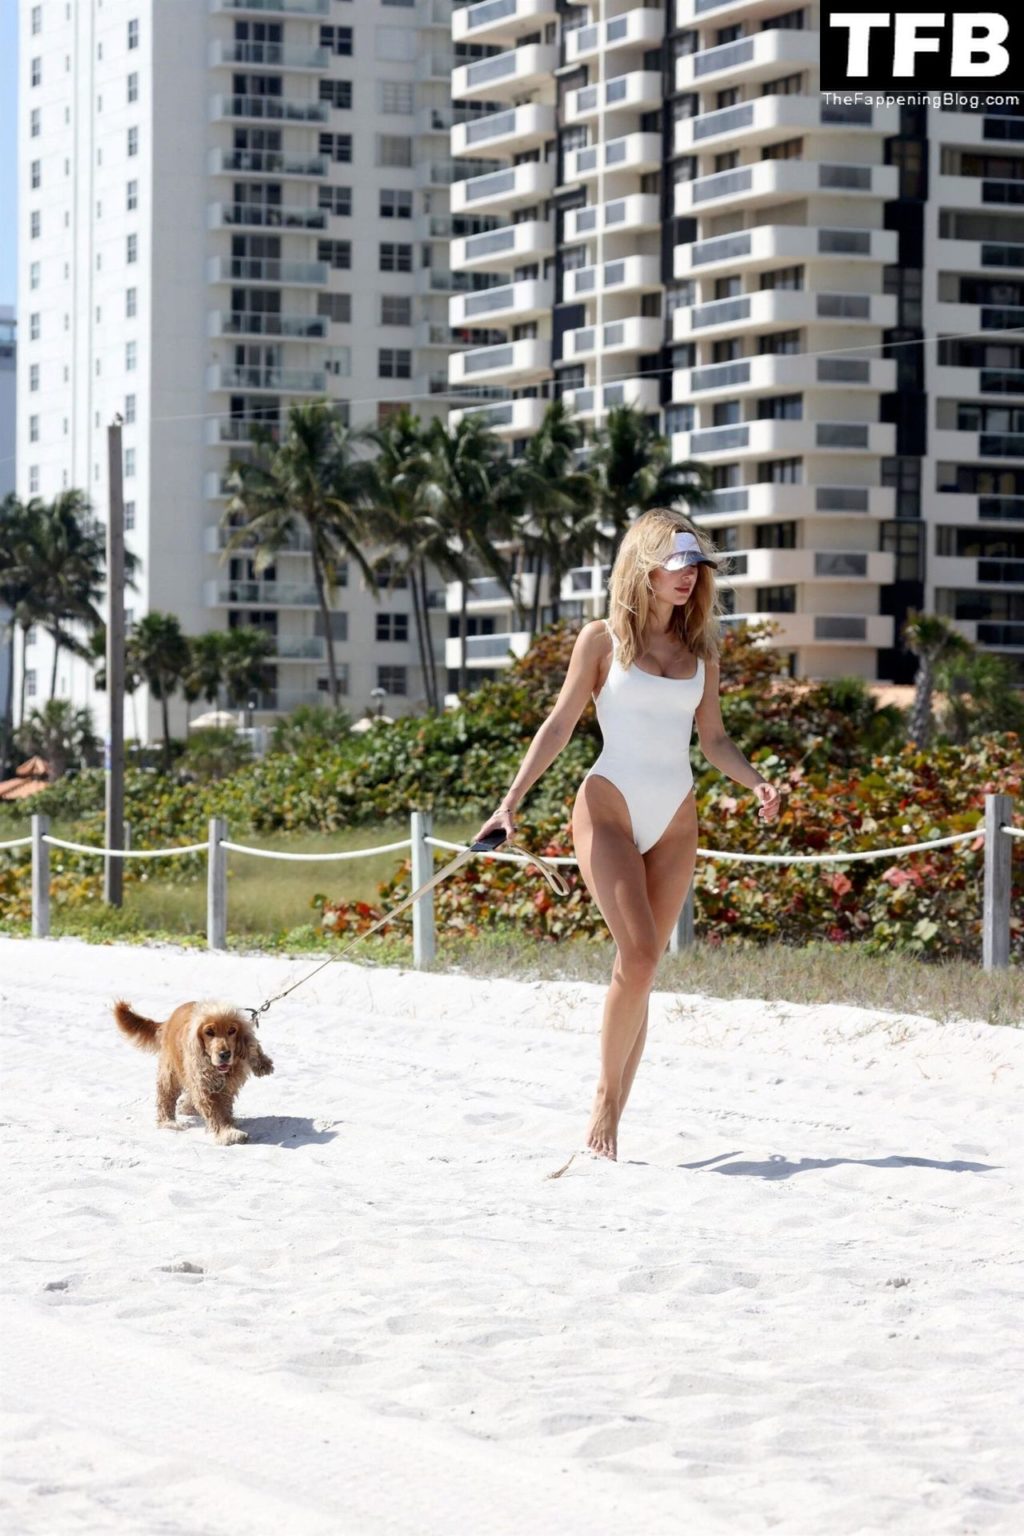 Kimberley Garner Shows Off Her Sexy Bikini Body in a White One-Piece in Miami Beach (20 Photos)